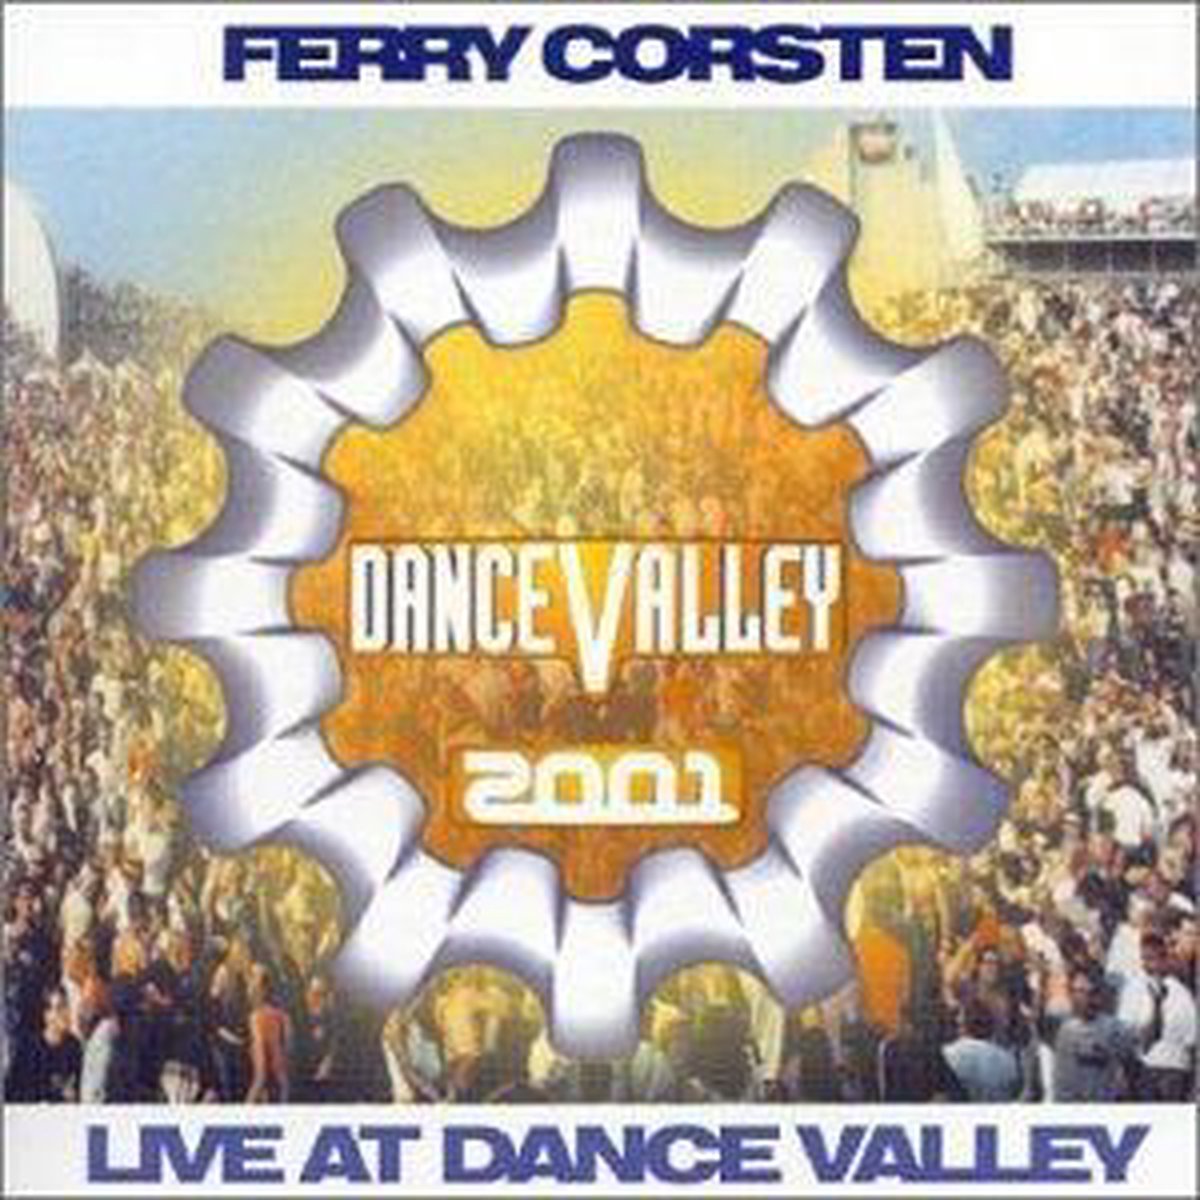 Ferry Corsten - Live At Dance Valley (2001)